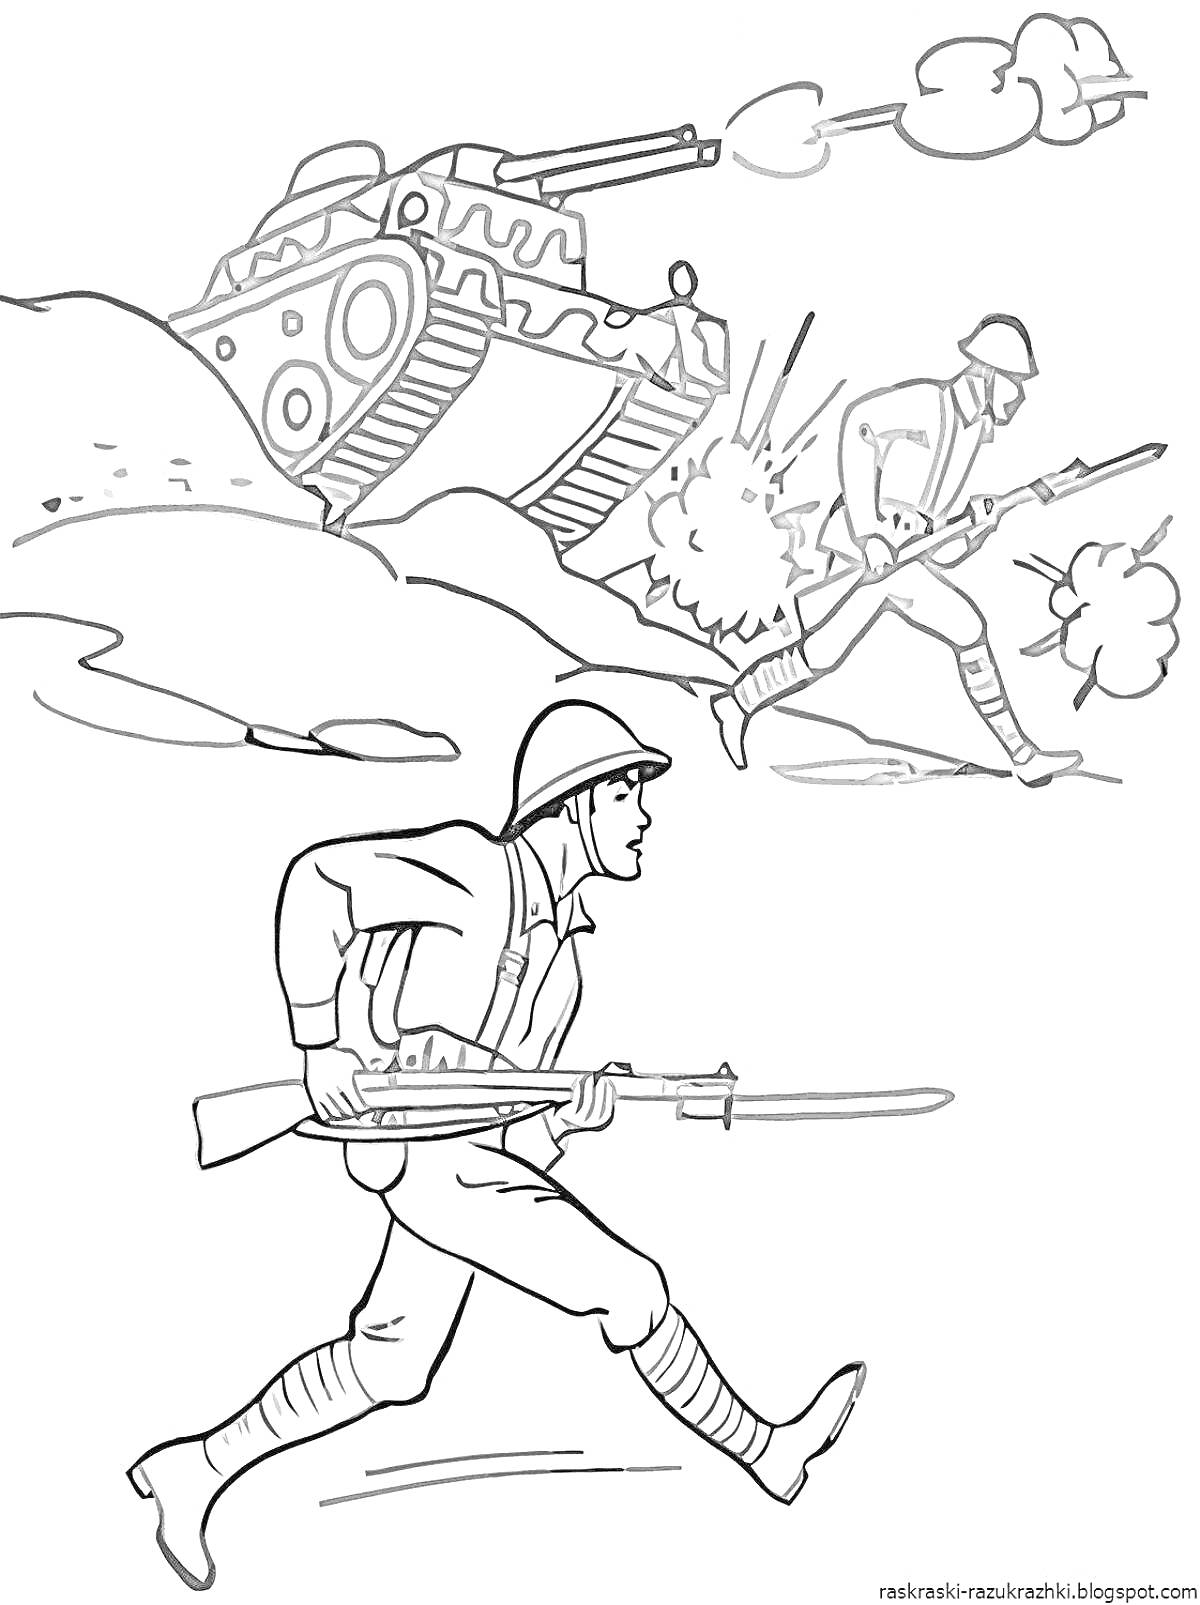 Раскраска Танковая атака, солдаты с ружьями, взрыв